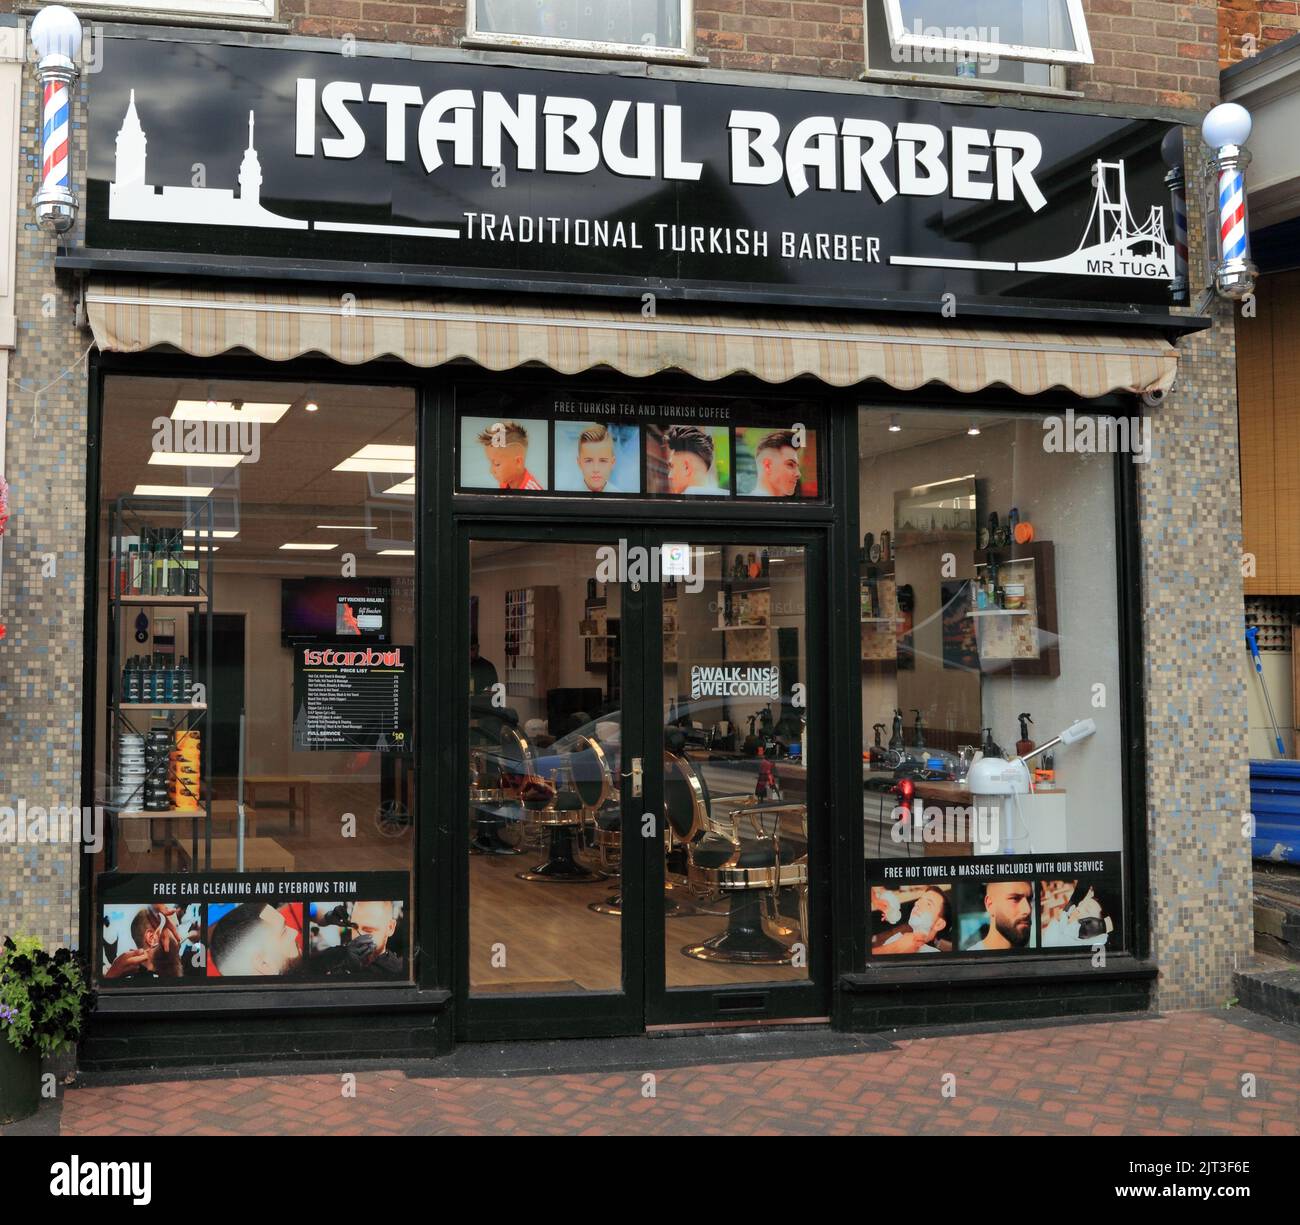 Istanbul Barber, hair salon, shop, traditional Turkish, Hunstanton, Norfolk, England Stock Photo